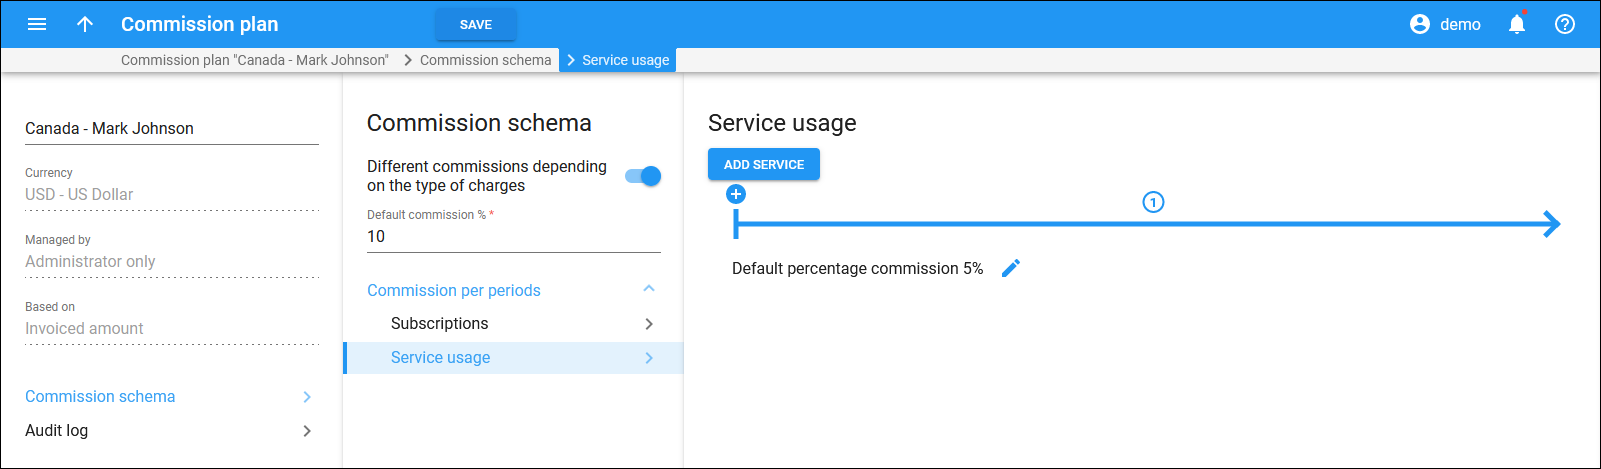 Commission schema -Service usage